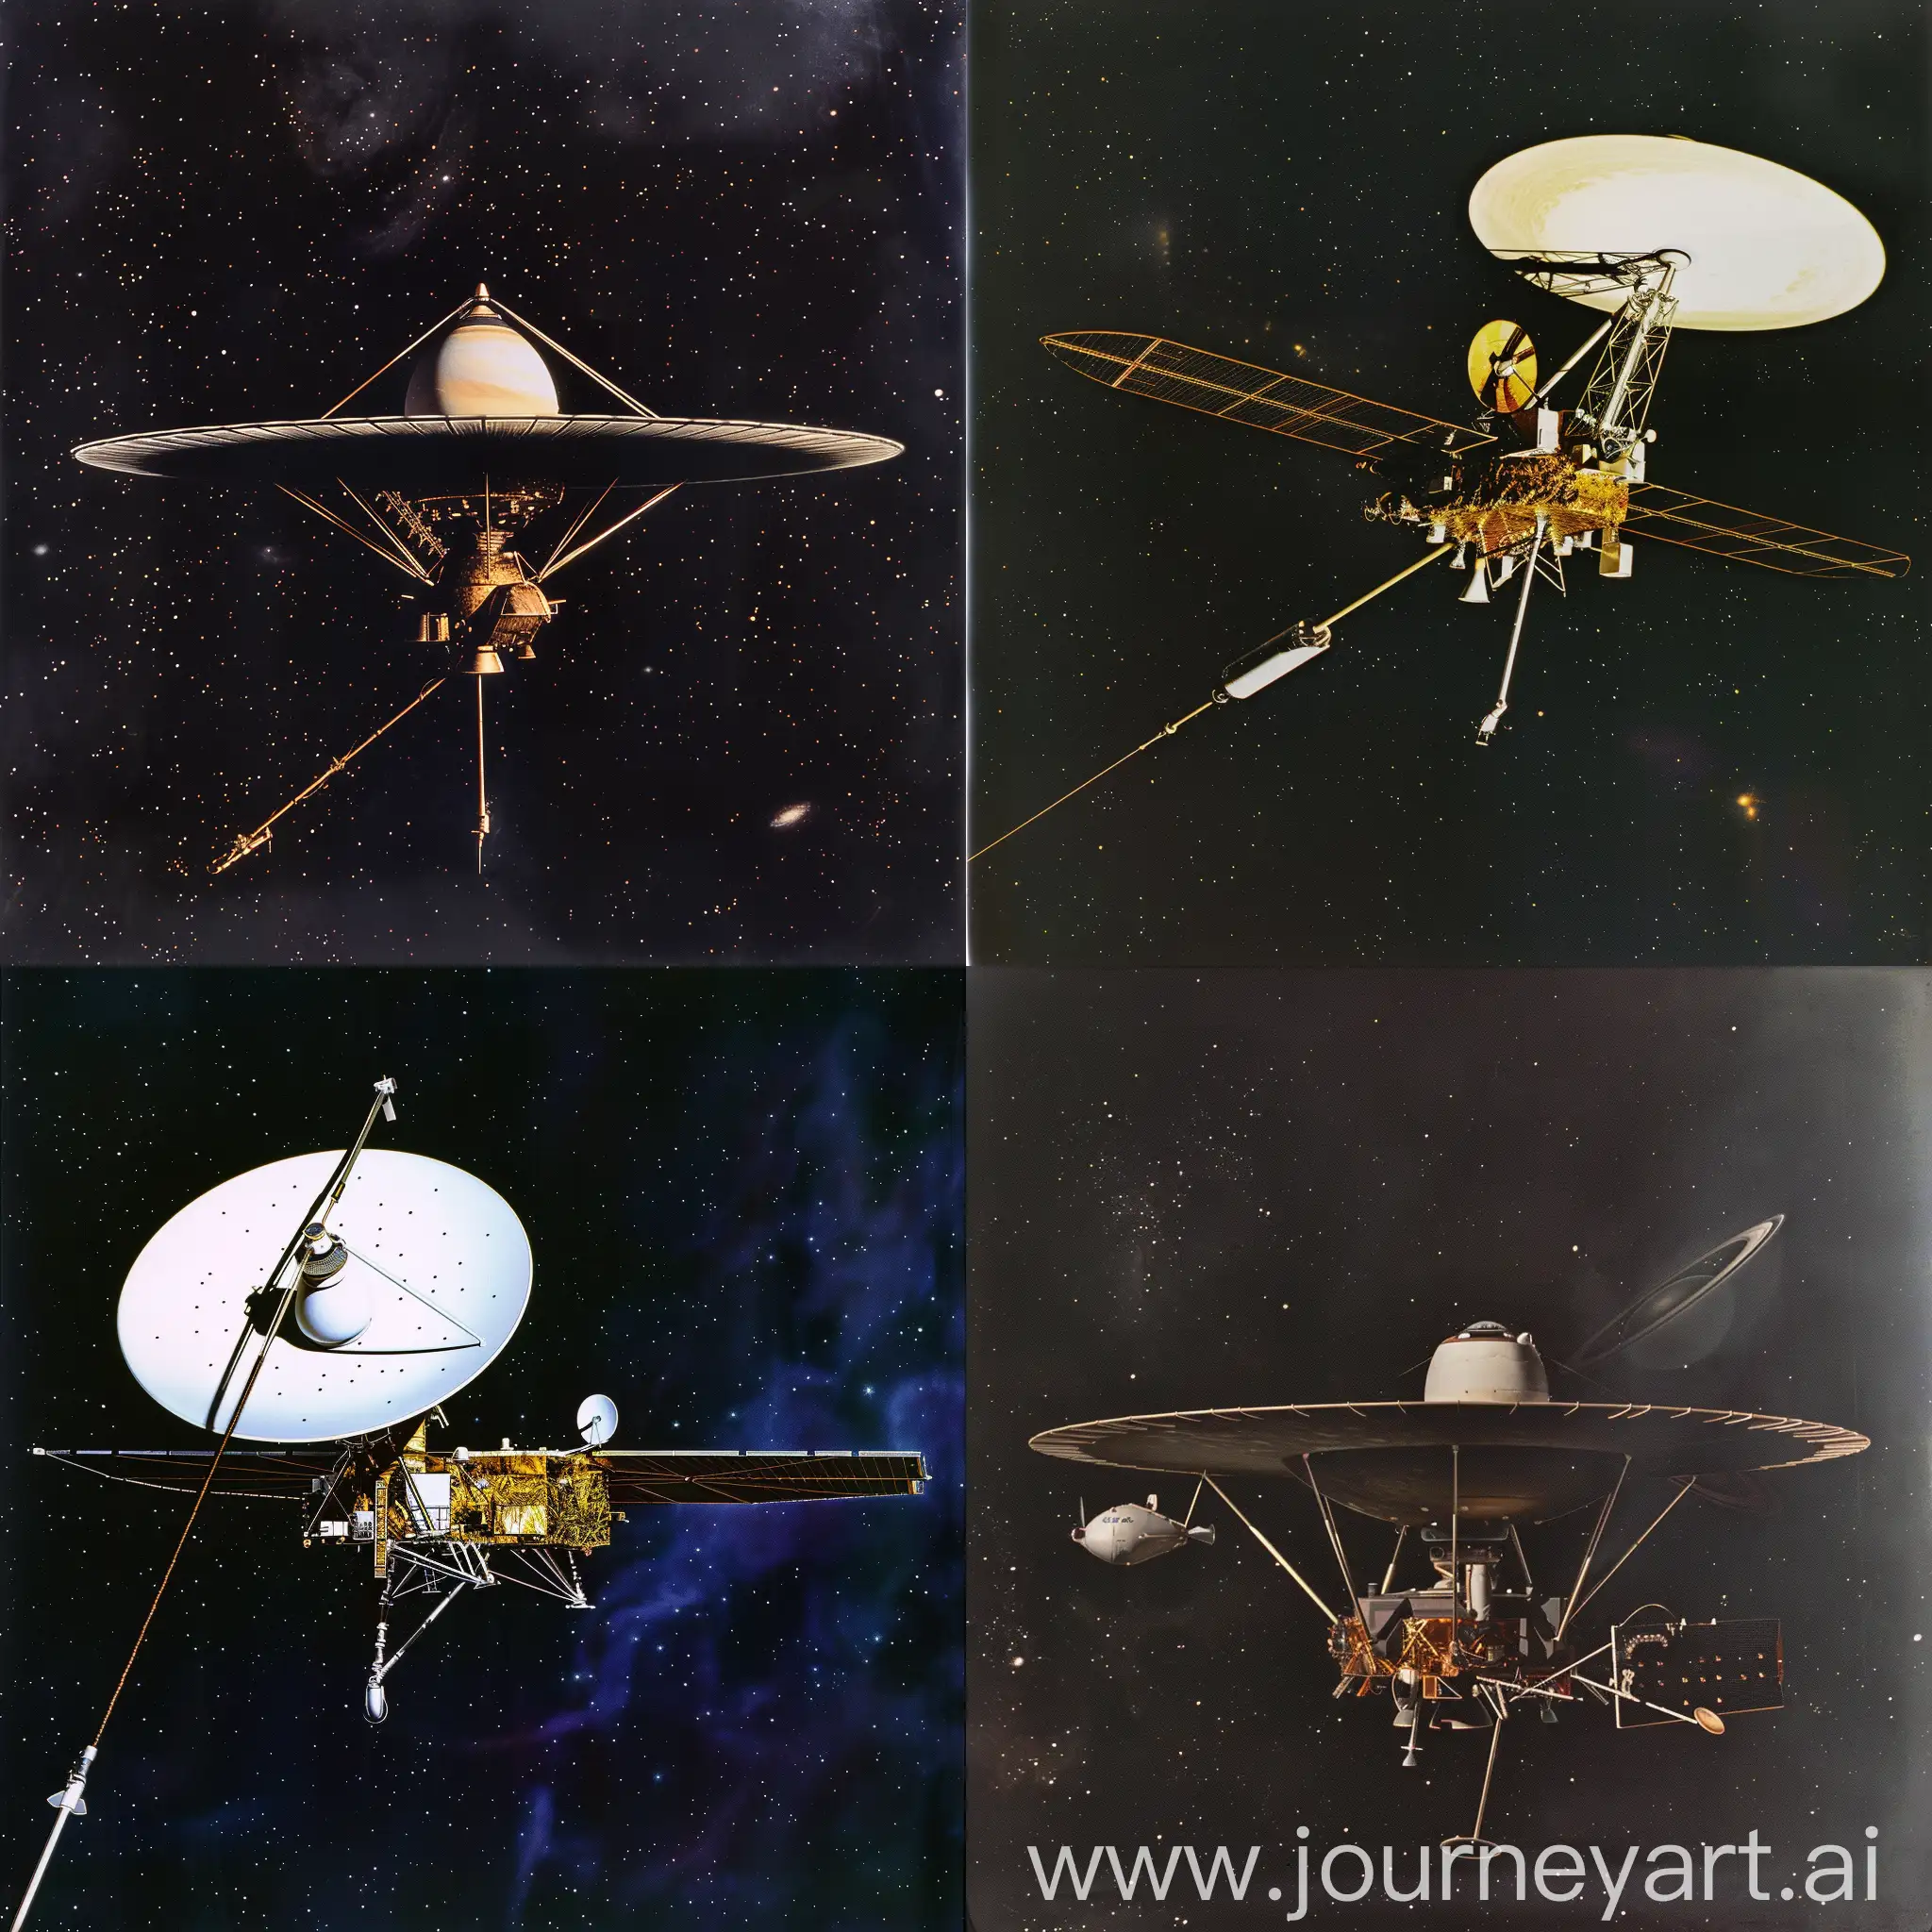 Voyager-Spacecraft-Journey-Through-YouTube-Captivating-View-of-Interstellar-Exploration